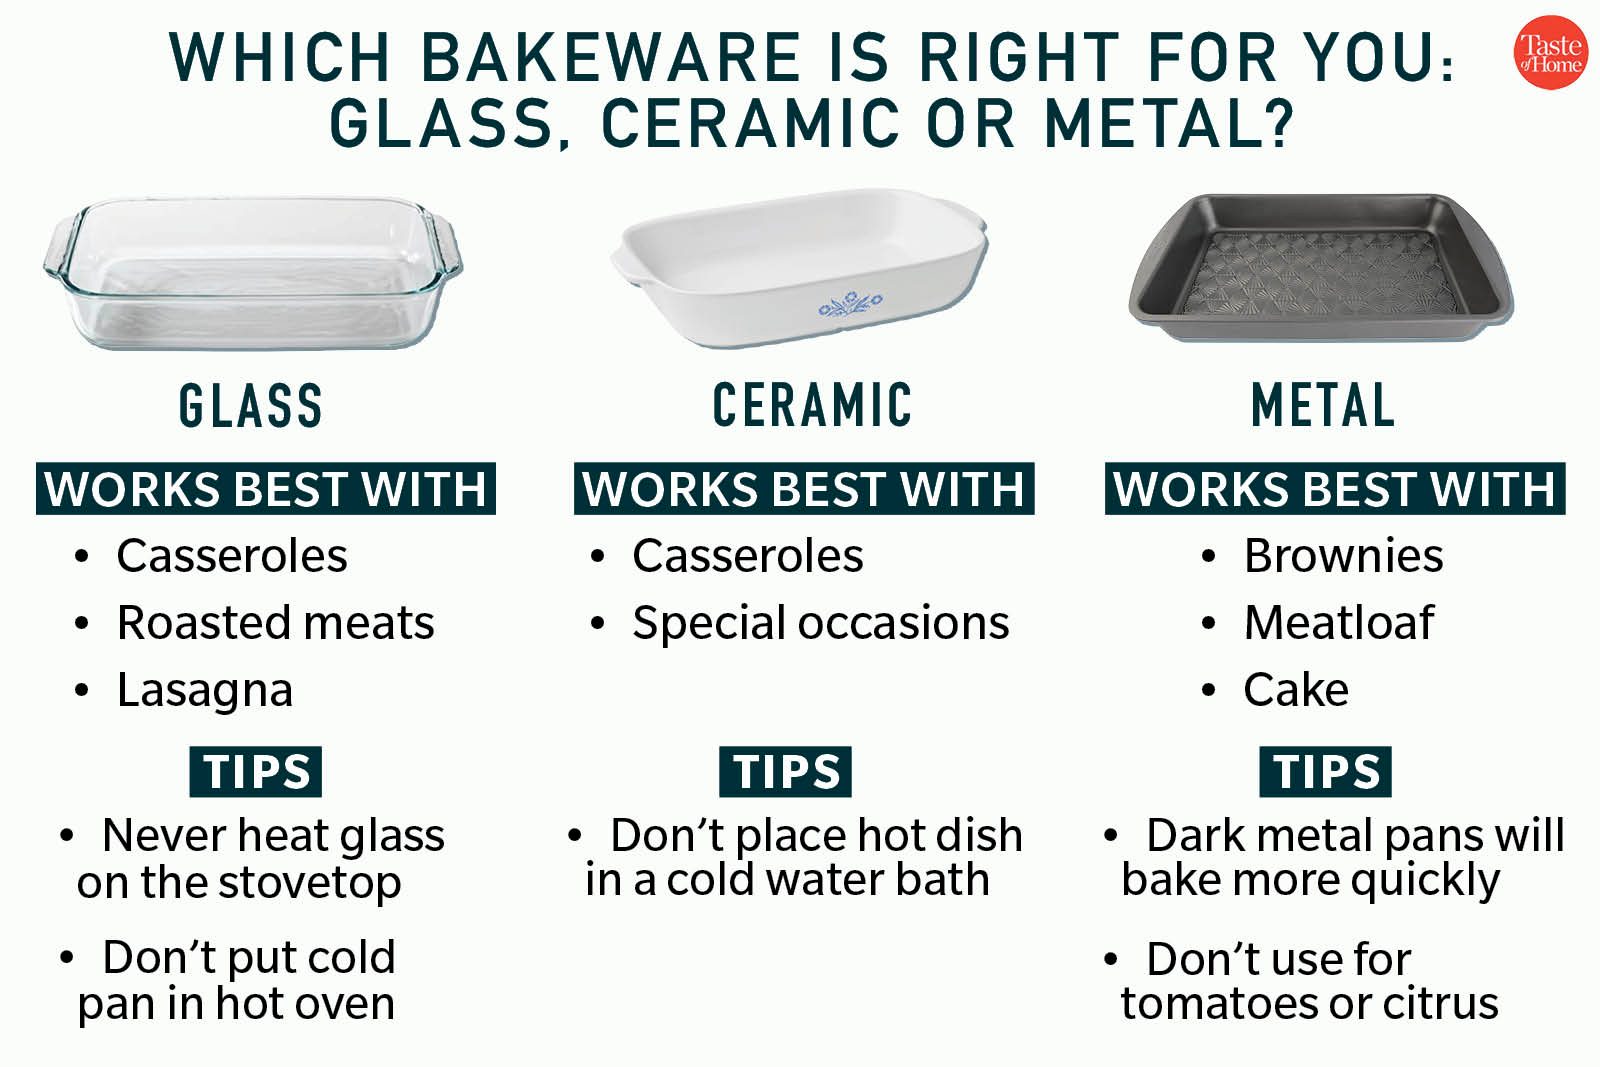 Cool experiment. Same recipe. Metal vs Glass pan. Bread stuck to